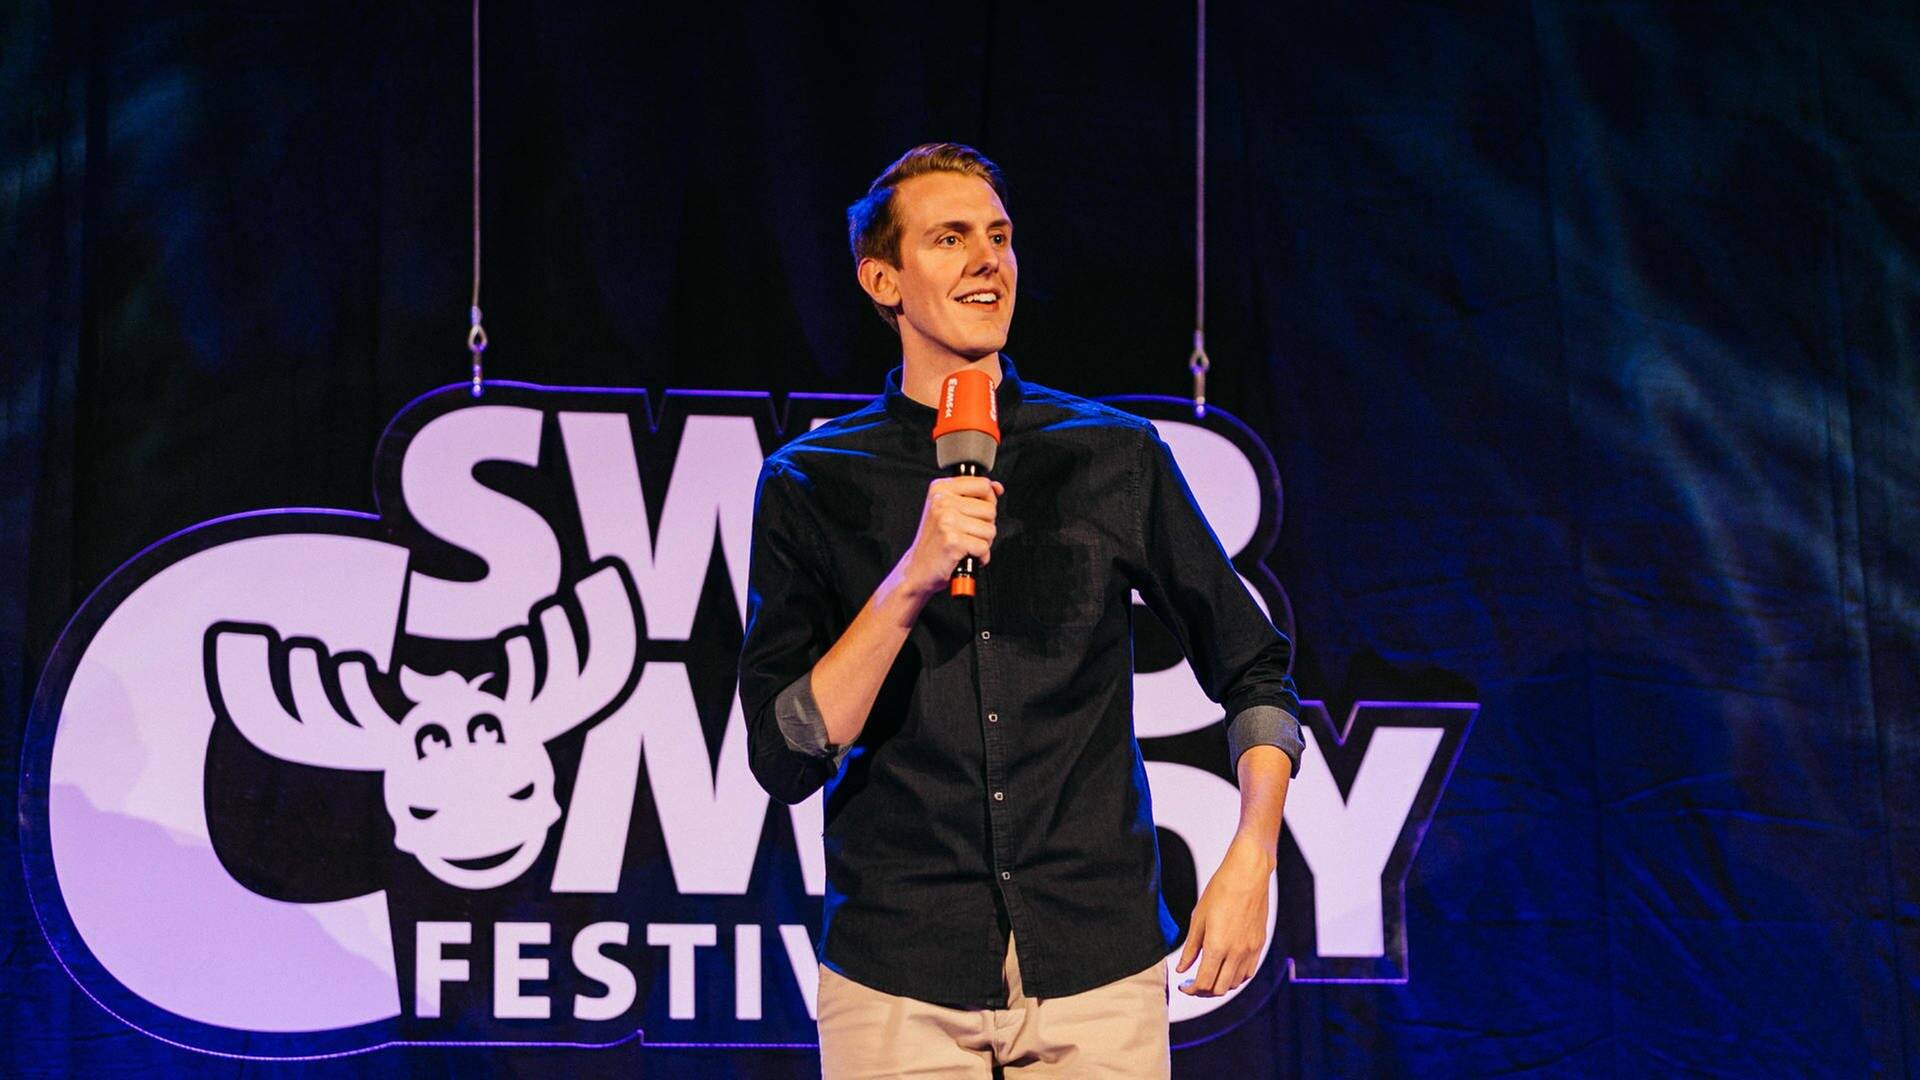 New Comedy beim SWR3 Comedy Festival 2019 (Foto: SWR3)